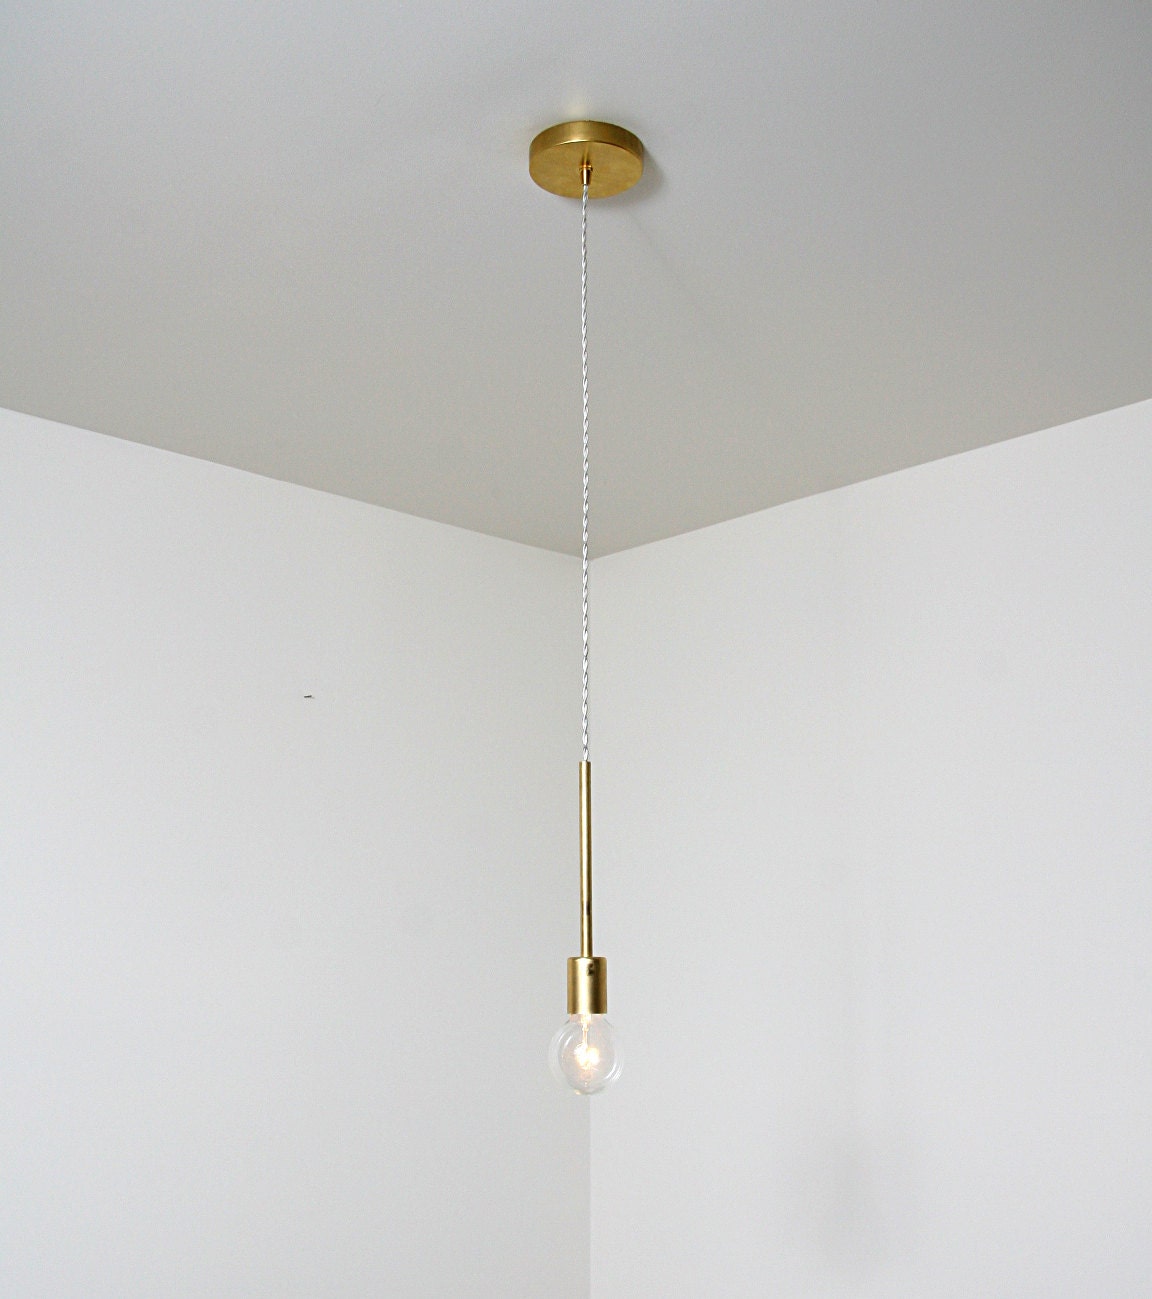 Unique handmade brass single pendant light fixture - 'One' - raymondbarberousse